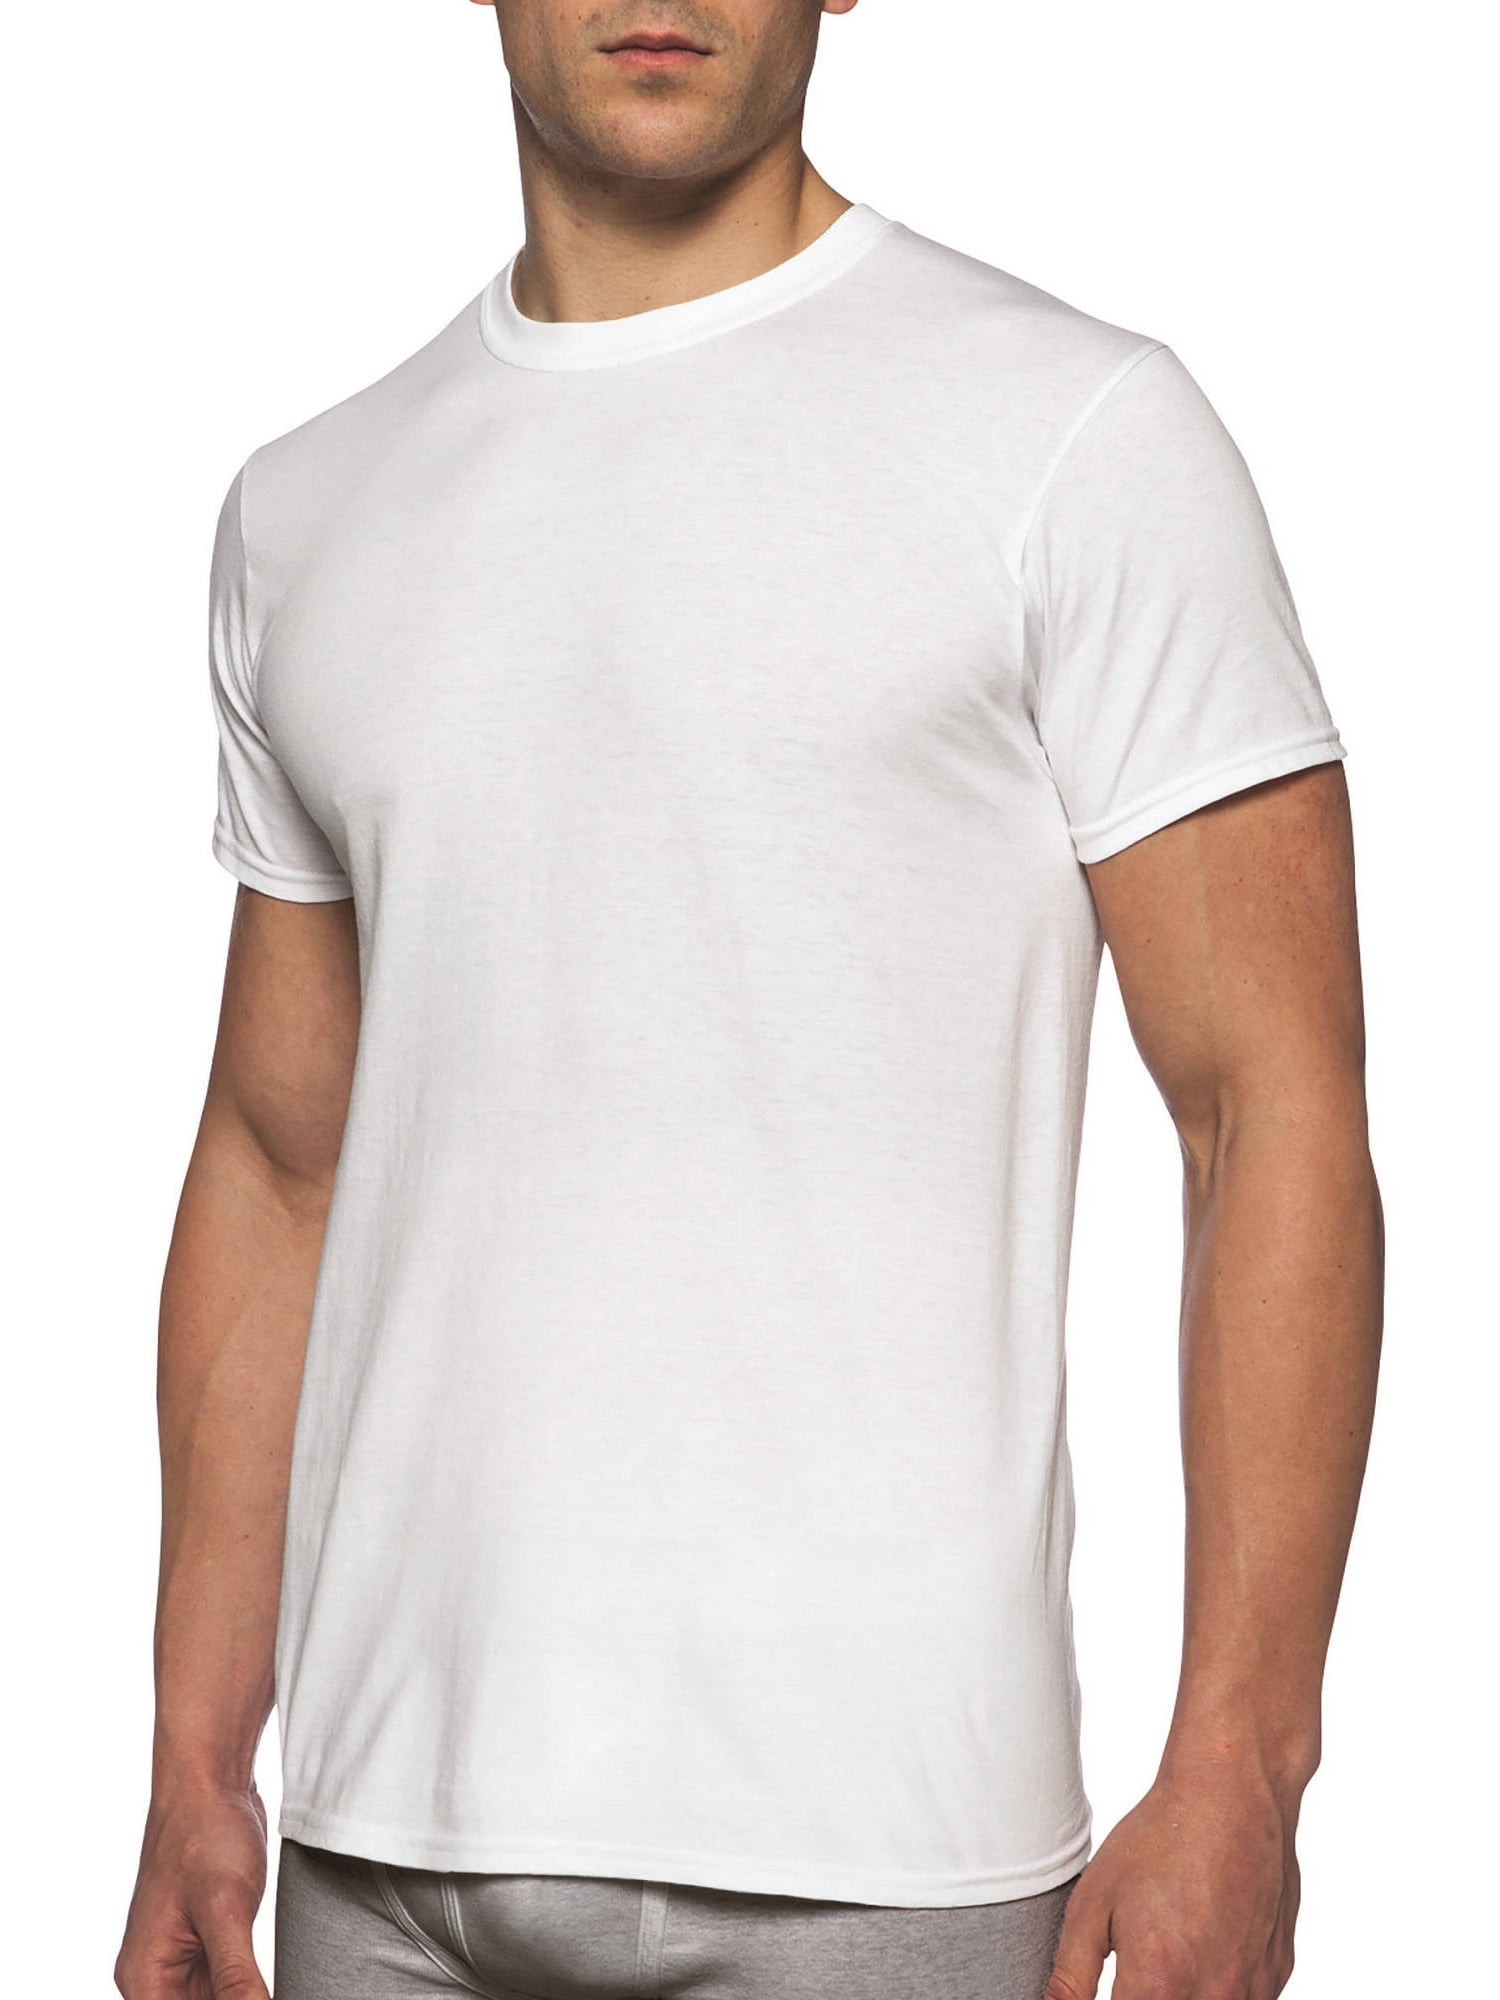 KIDS FASHION Shirts & T-shirts Ribbed Lefties T-shirt White 11Y discount 91% 